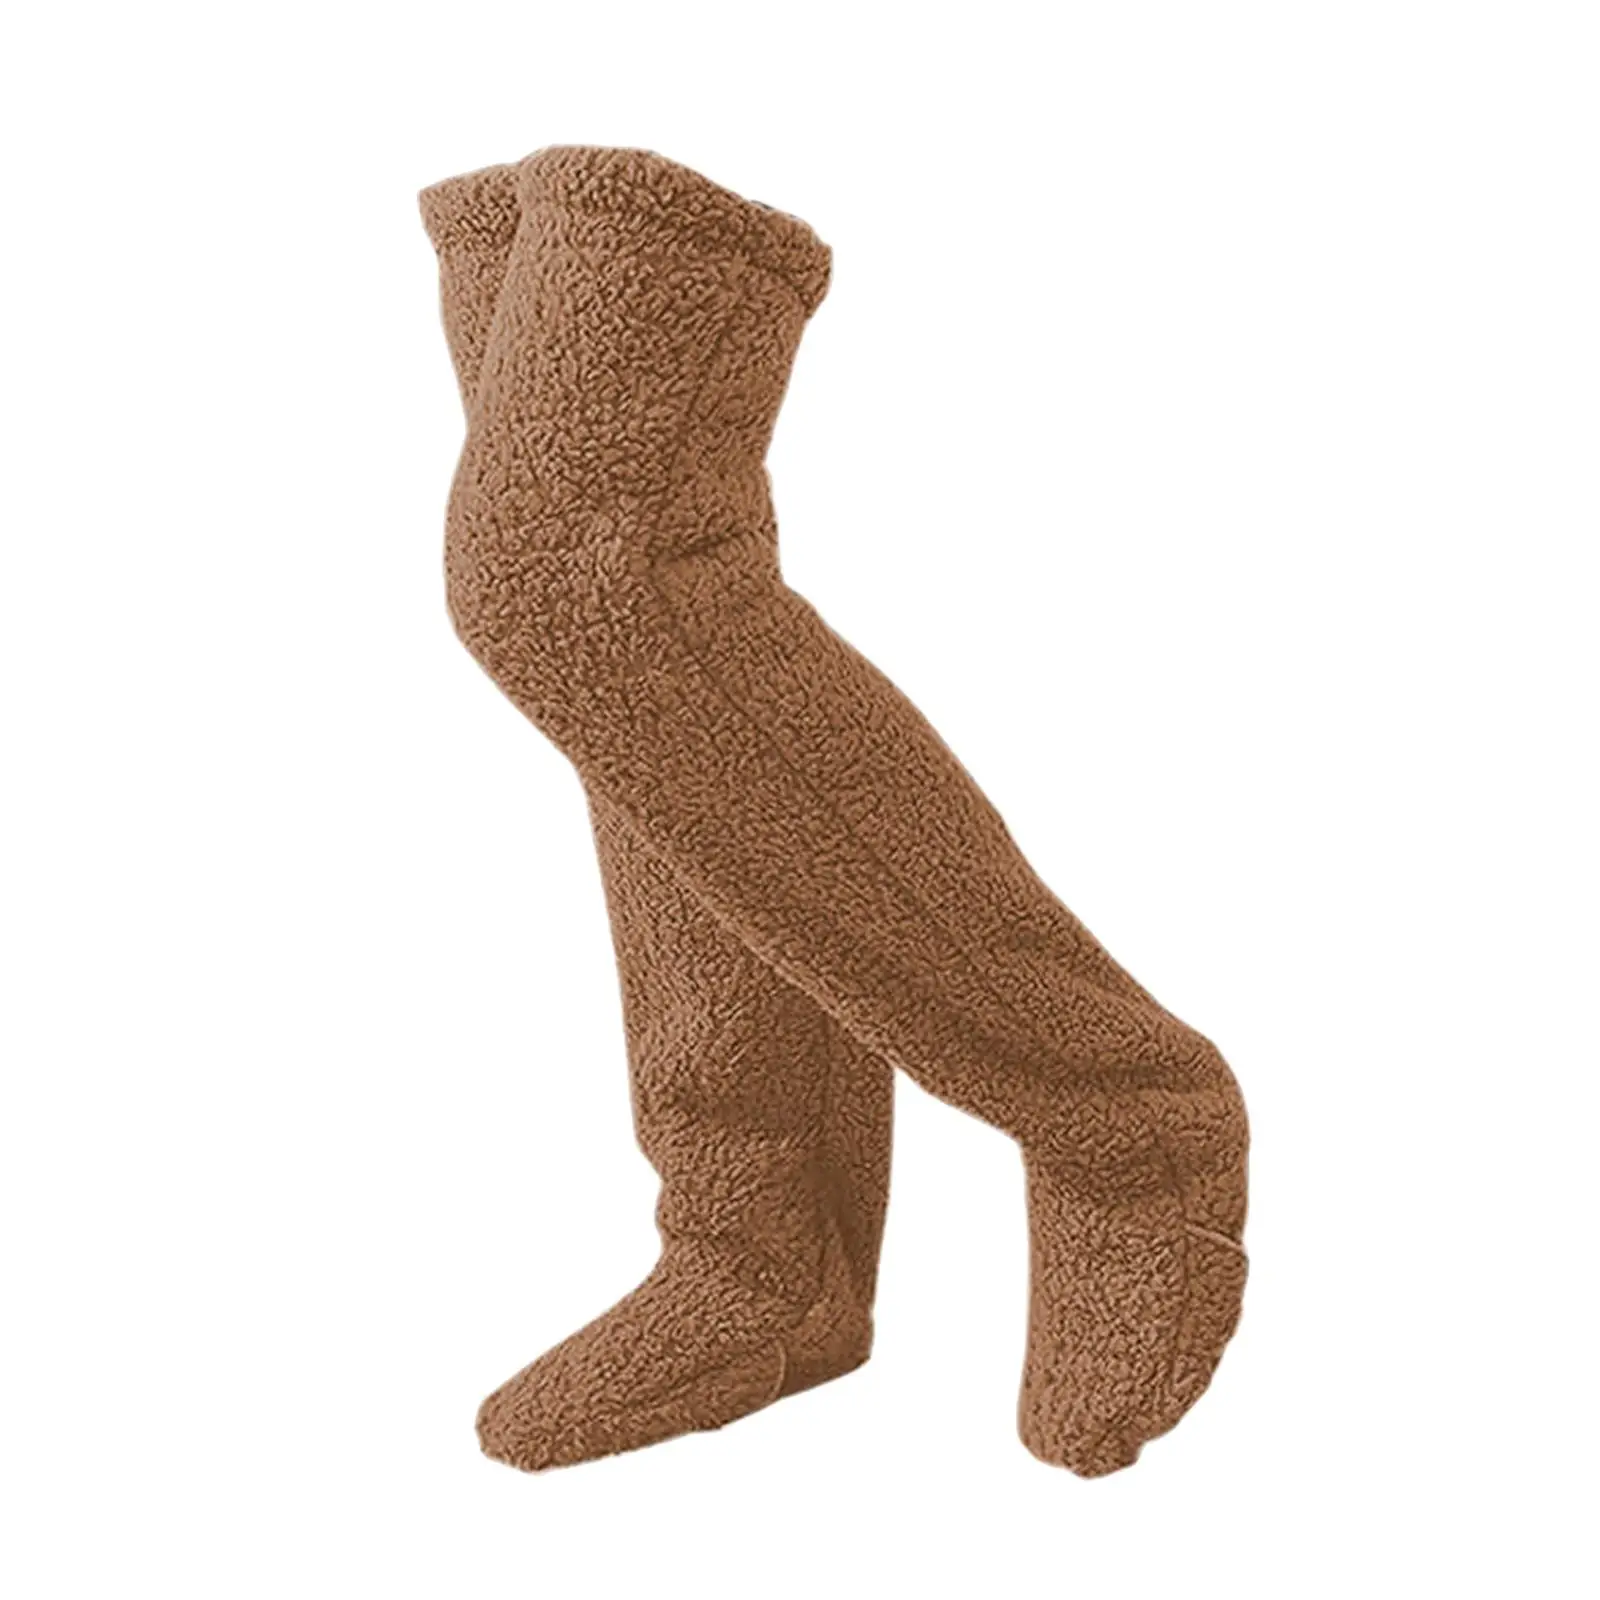 Plush Leg Warmers Winter Home Sleeping Socks Long Stocking Thigh High Socks